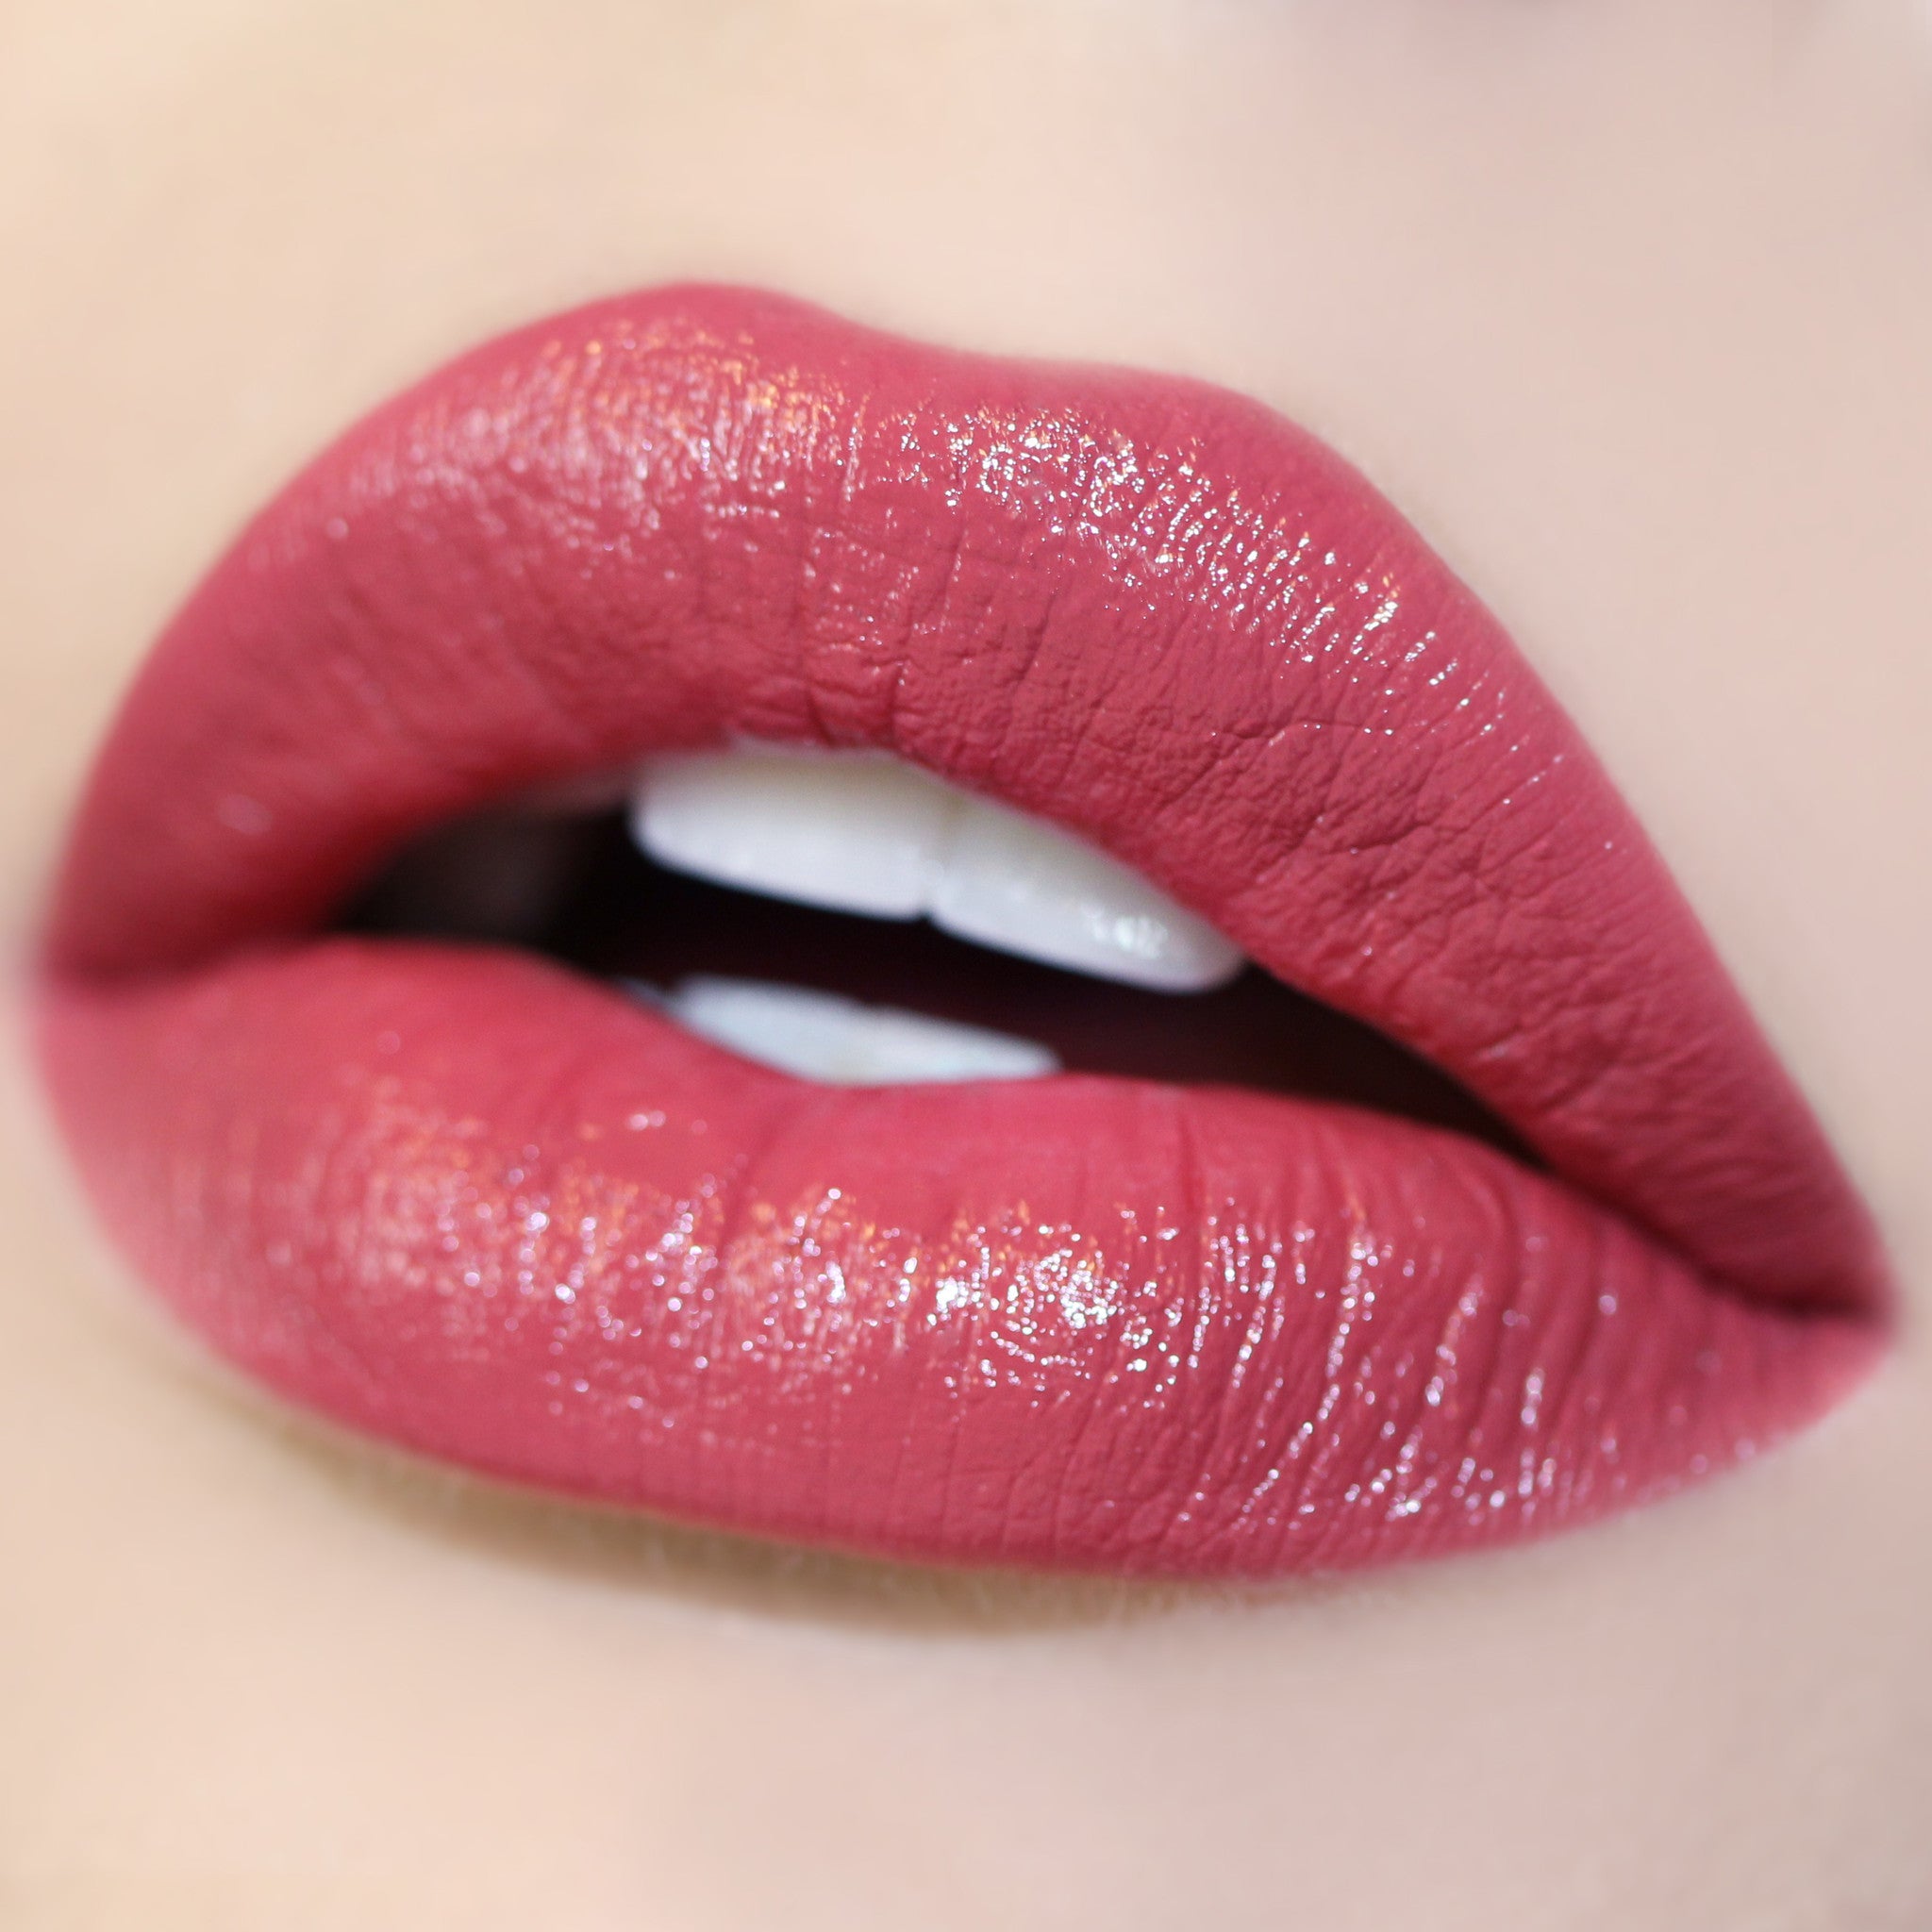 chanel rouge allure lipstick 99